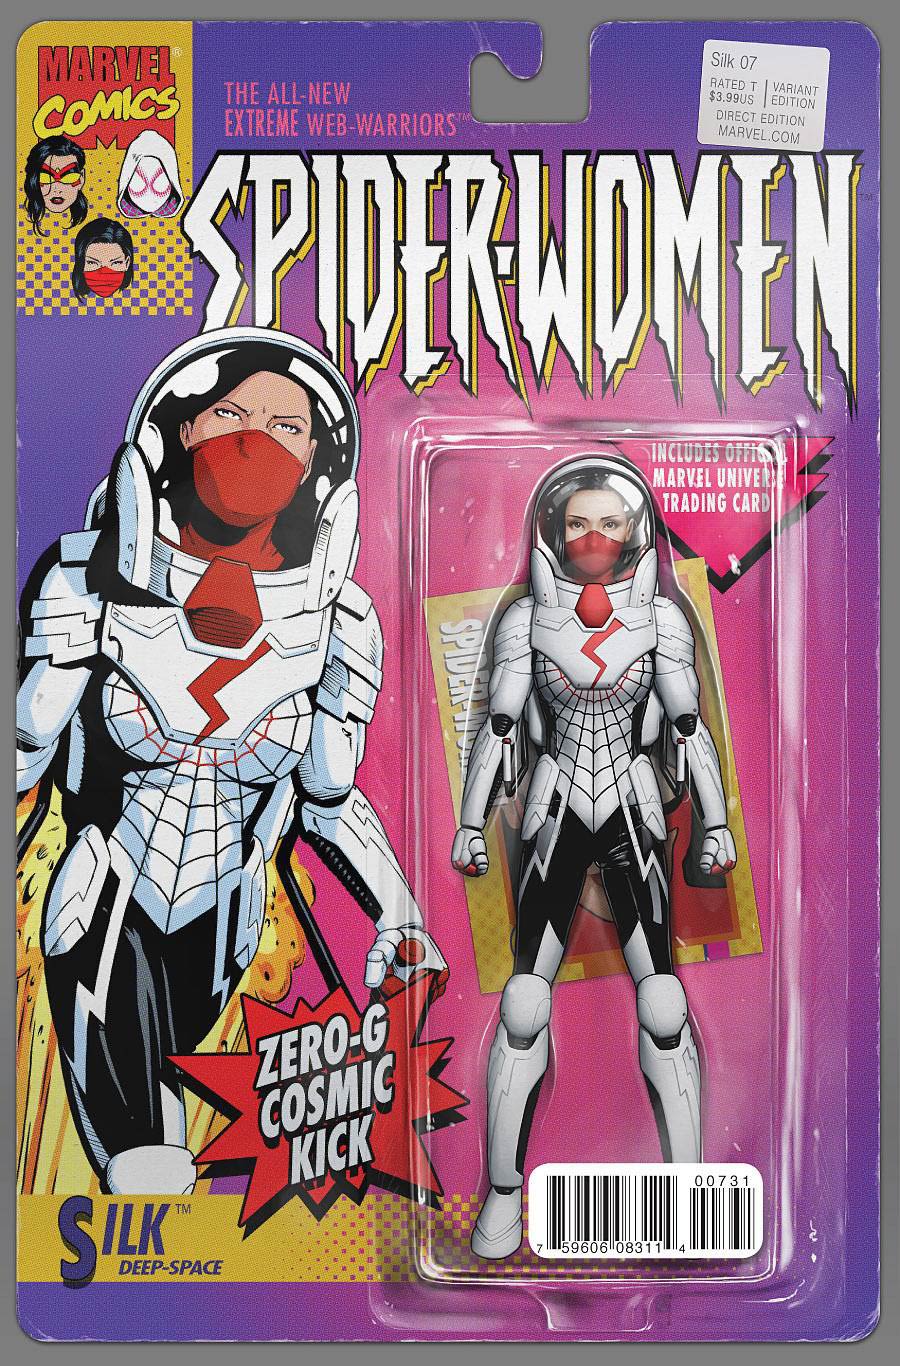 Silk Vol 2 #7 Cover C Variant John Tyler Christopher Action Figure Cover (Spider-Women Part 3)